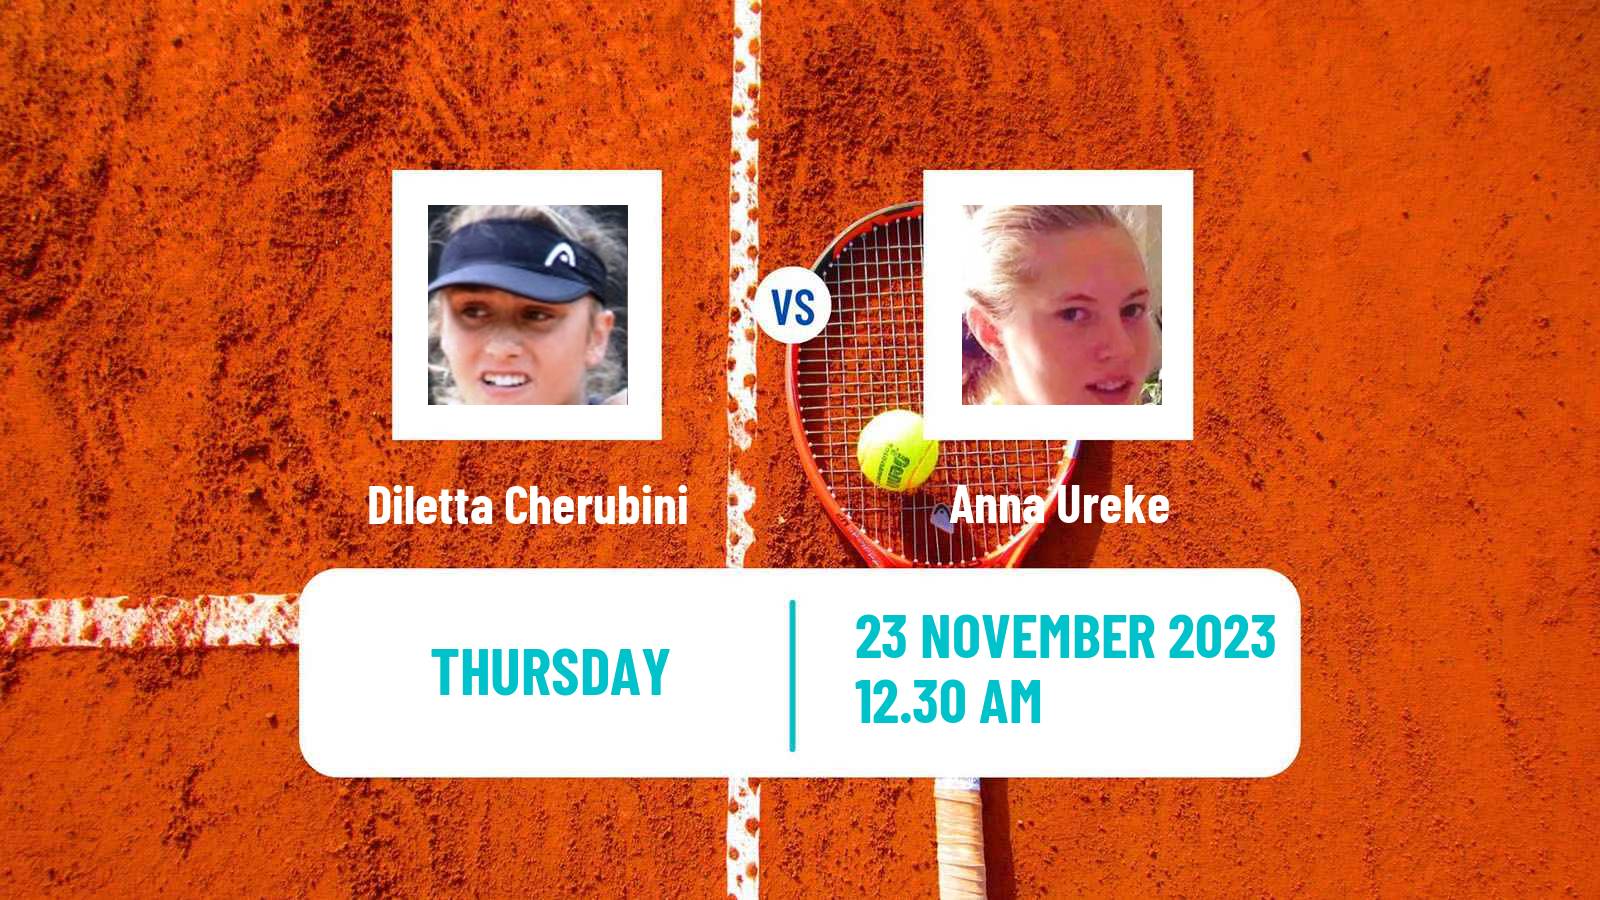 Tennis ITF W25 Bengaluru 2 Women Diletta Cherubini - Anna Ureke